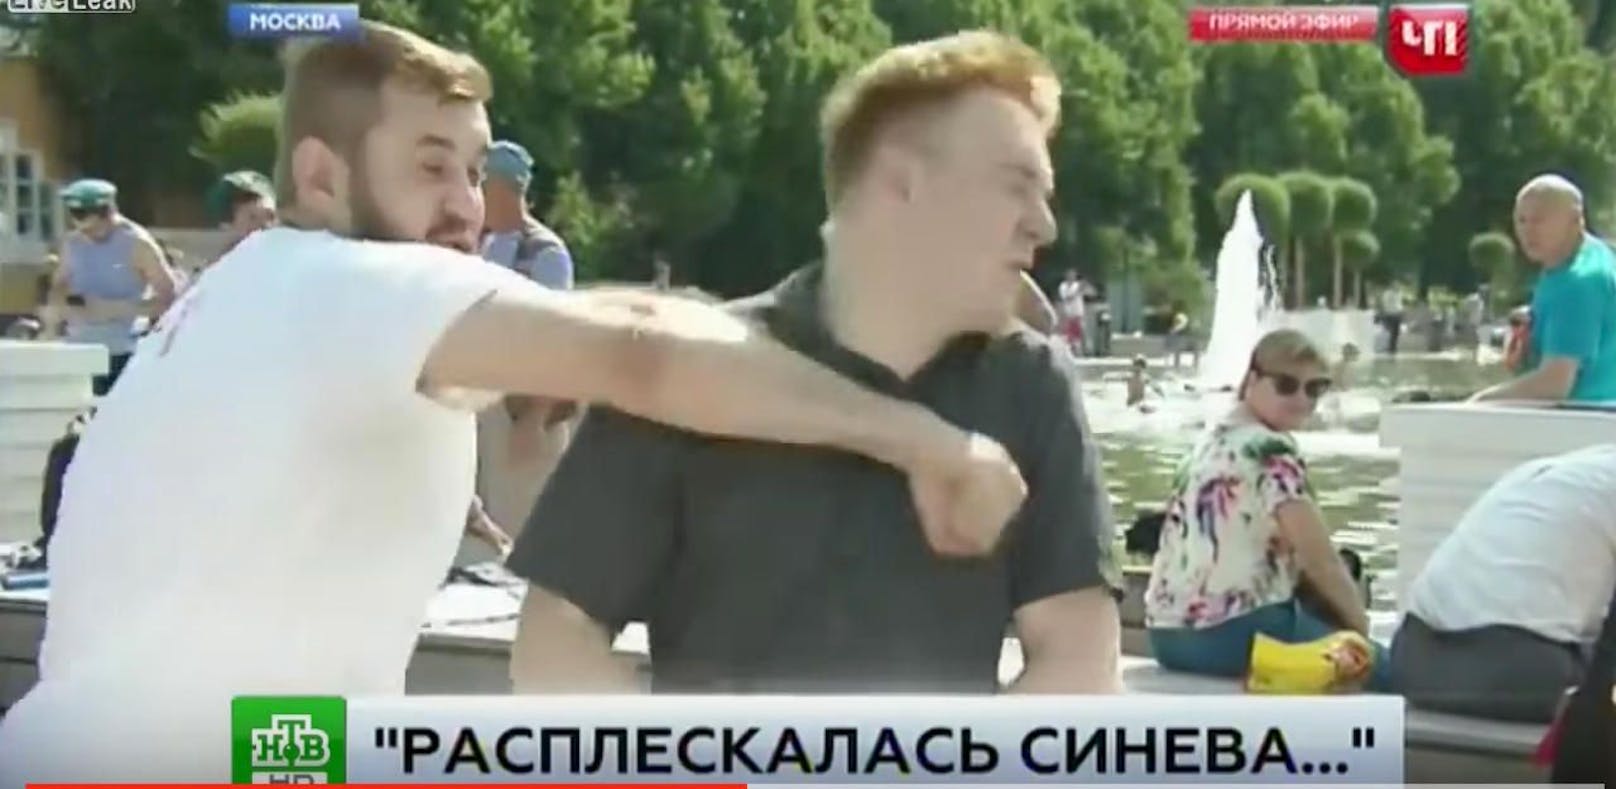 Live im TV: Betrunkener prügelt Reporter!